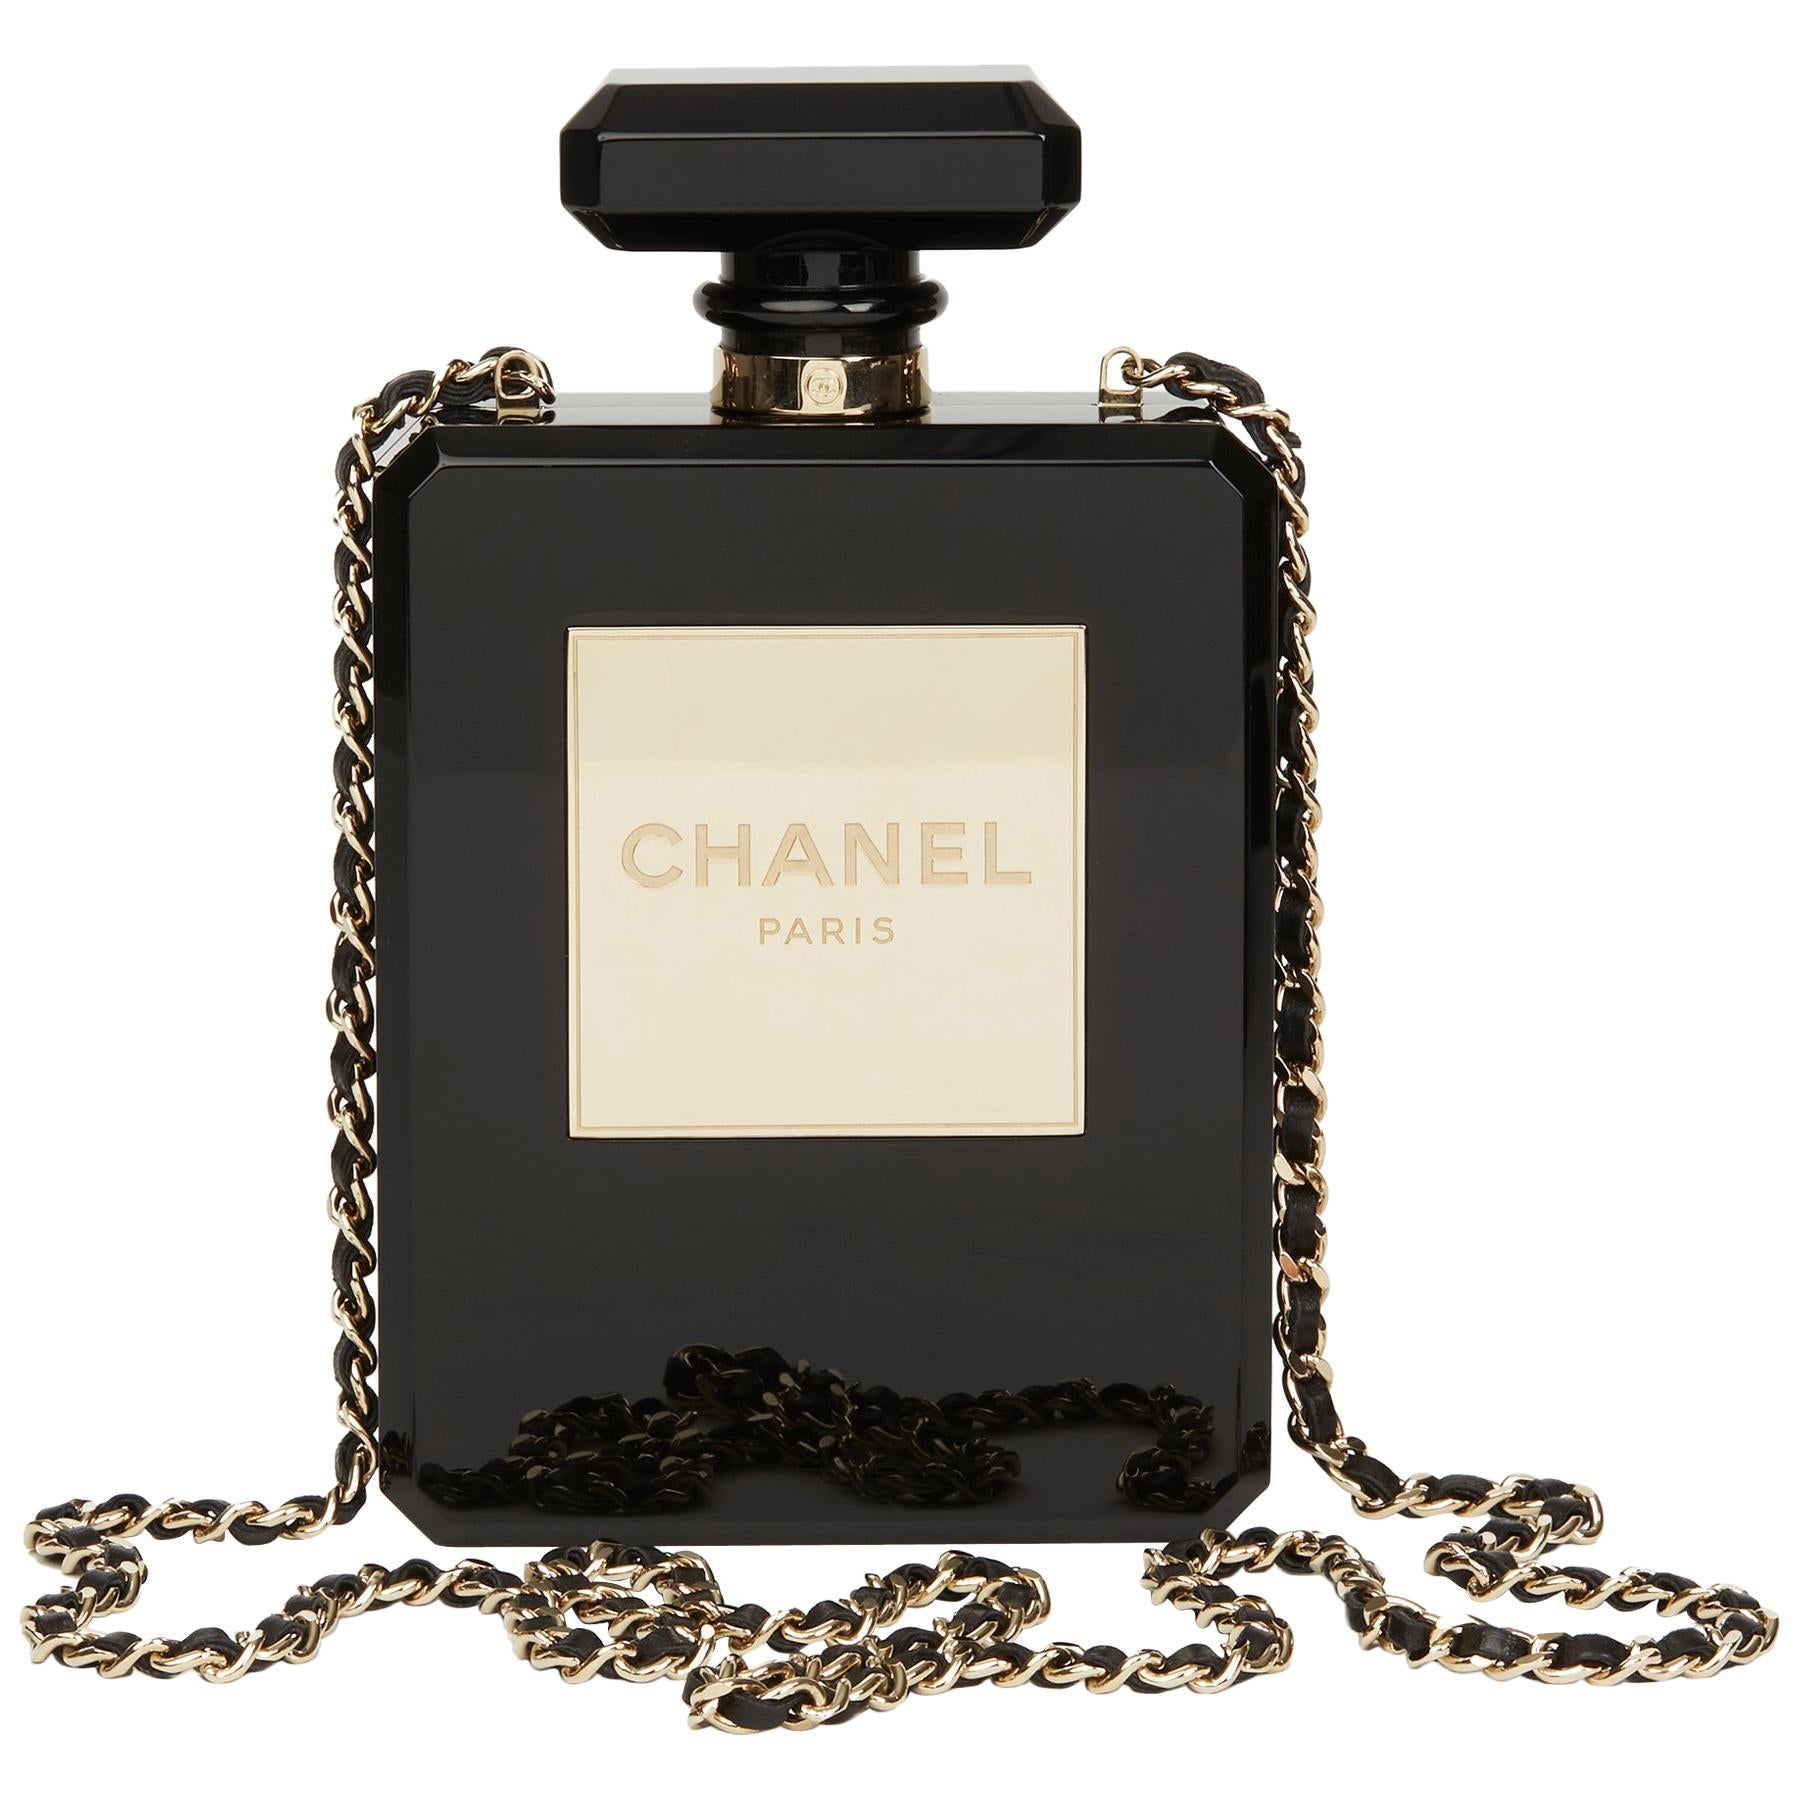 2013 Chanel Black Plexiglass No. 5 Perfume Bottle Bag